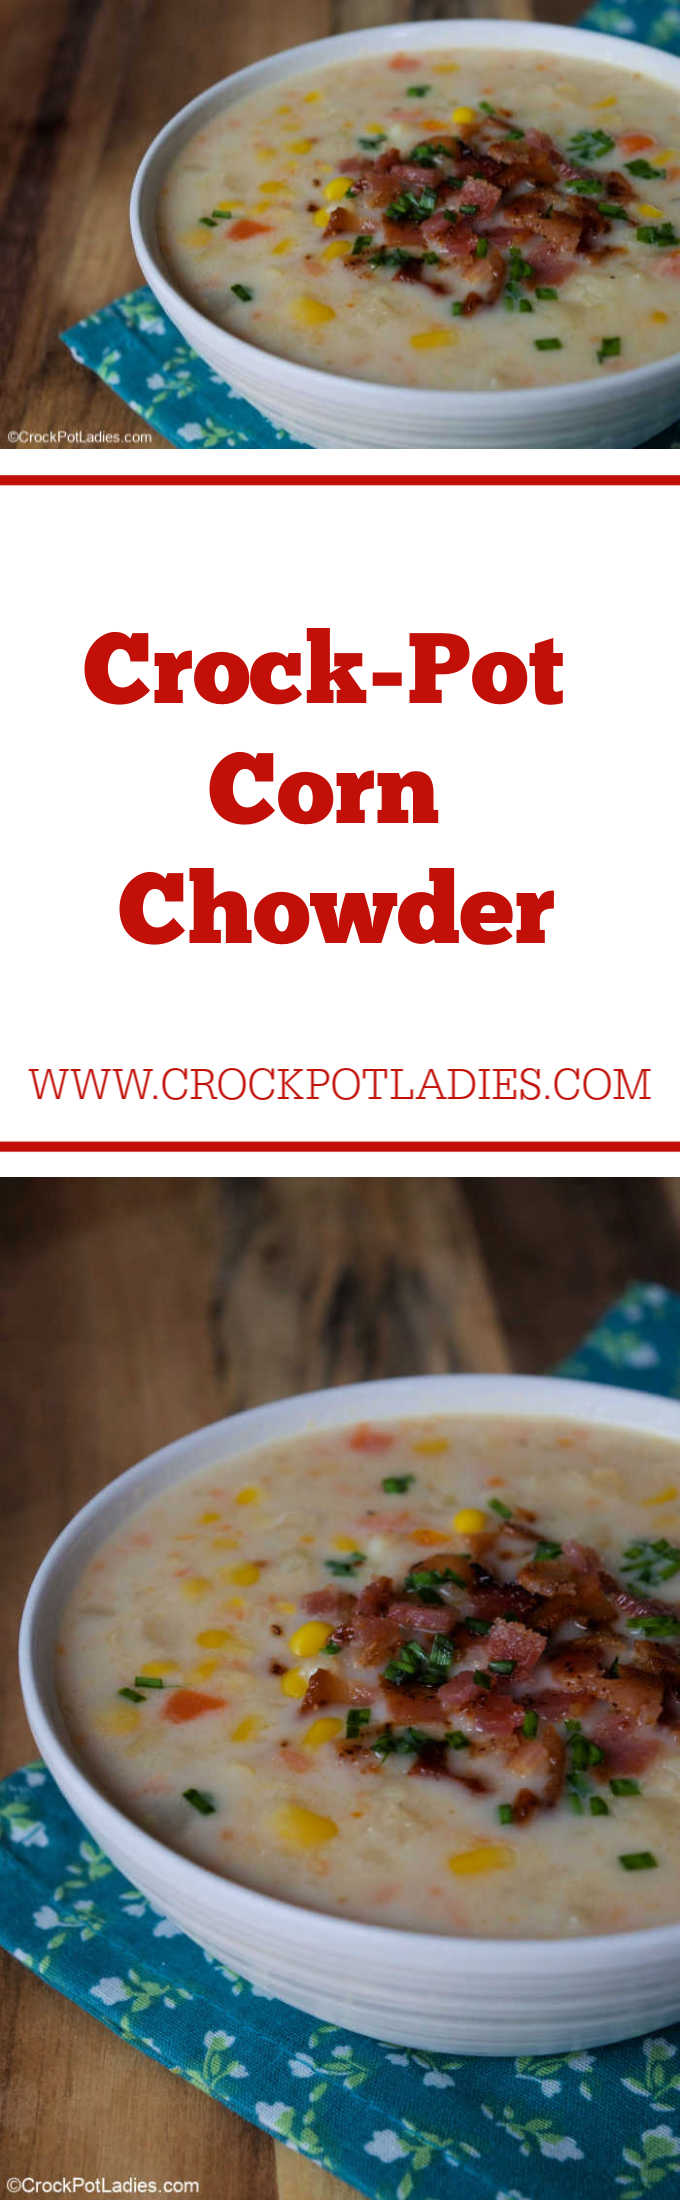 Crock-Pot Corn Chowder